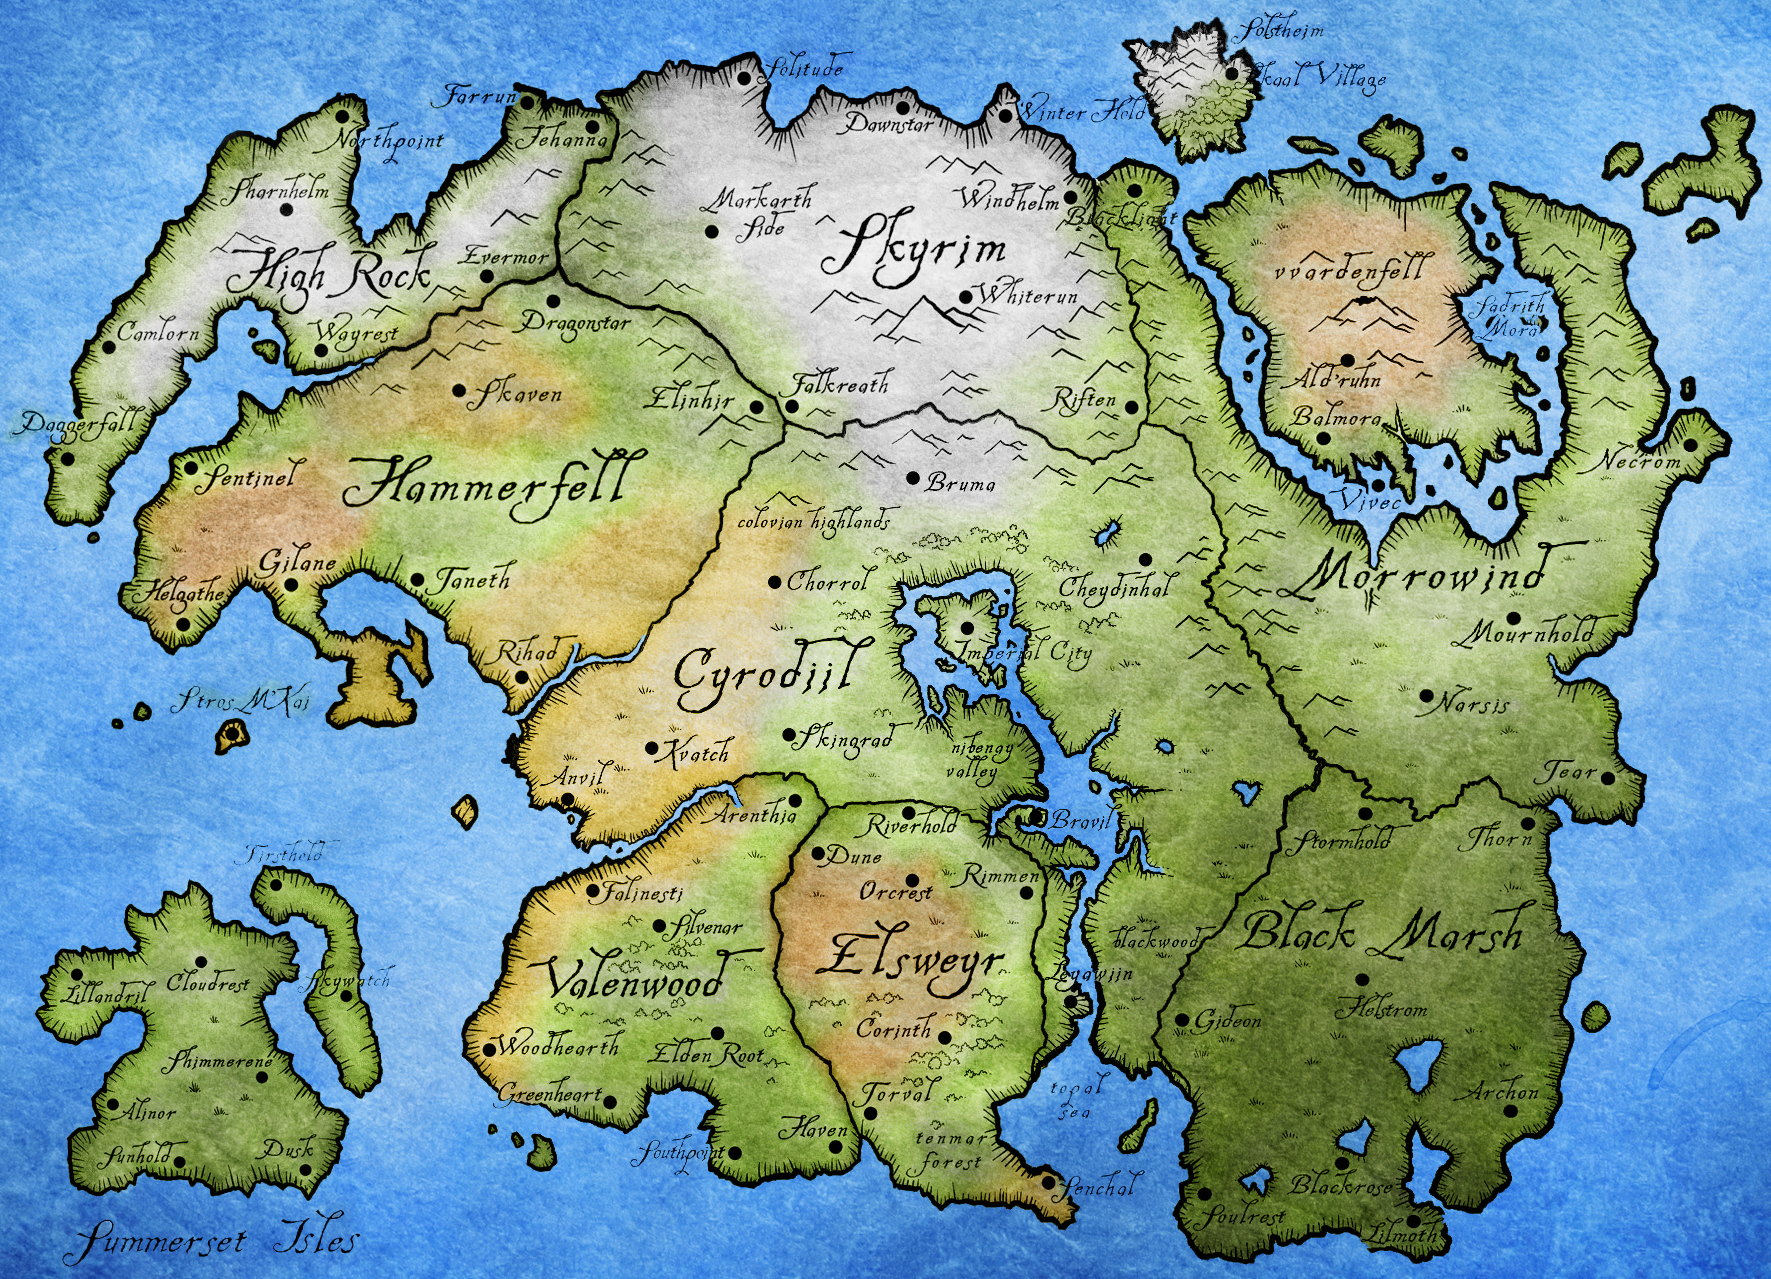 Elder Scrolls Inspired Scrolls 3 Maps of Tamriel